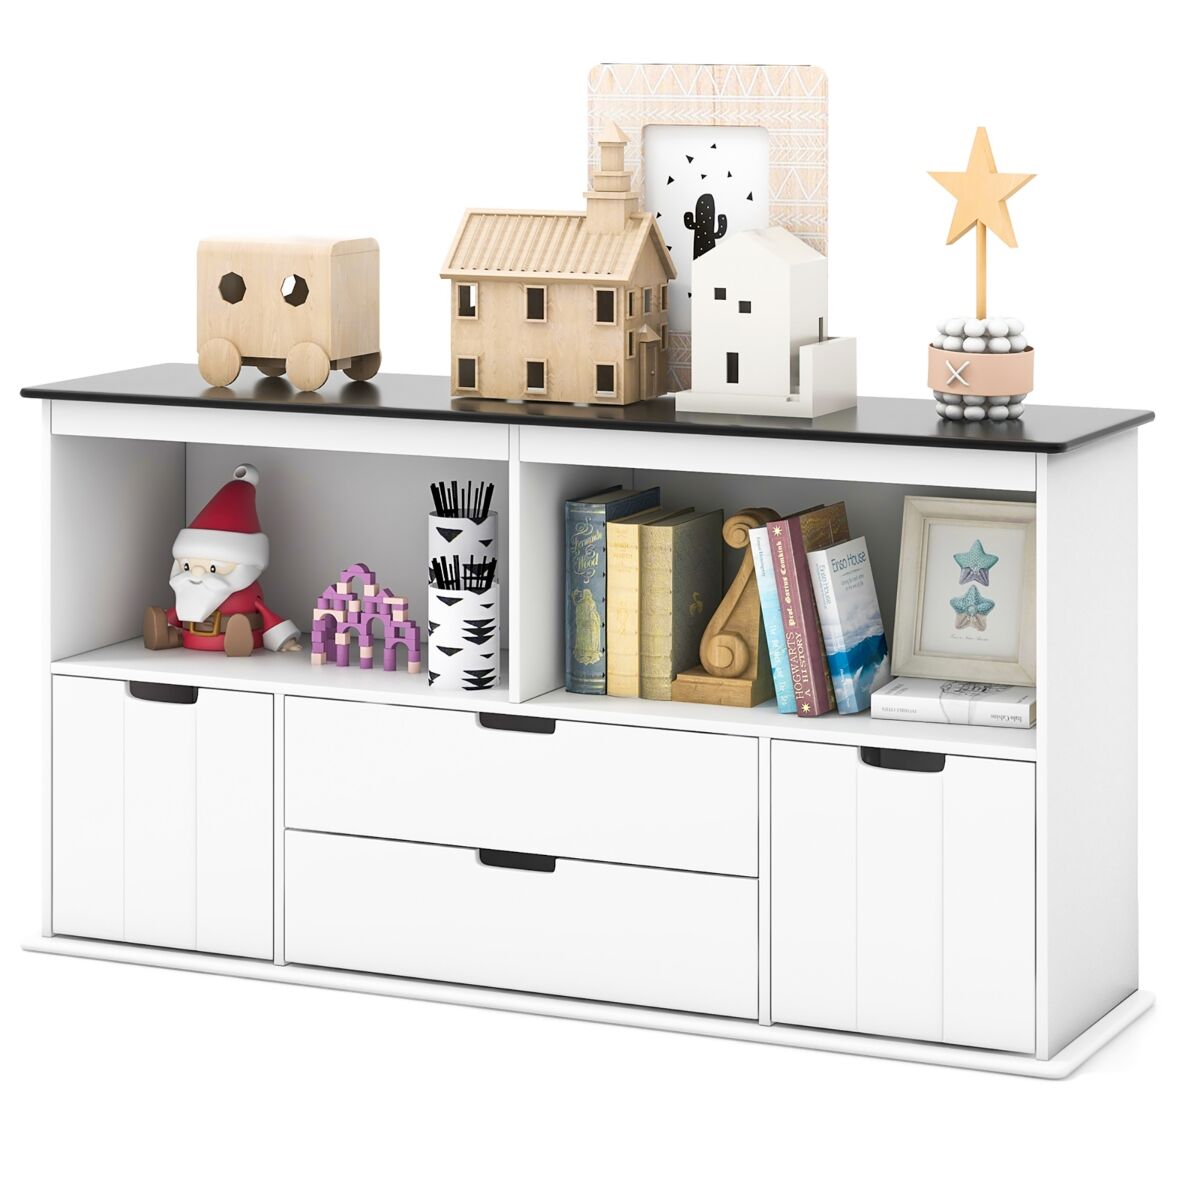 Costway Kids Toy Storage Organizer Wooden Bookshelf Tv Stand with Drawers Blackboard Top - White